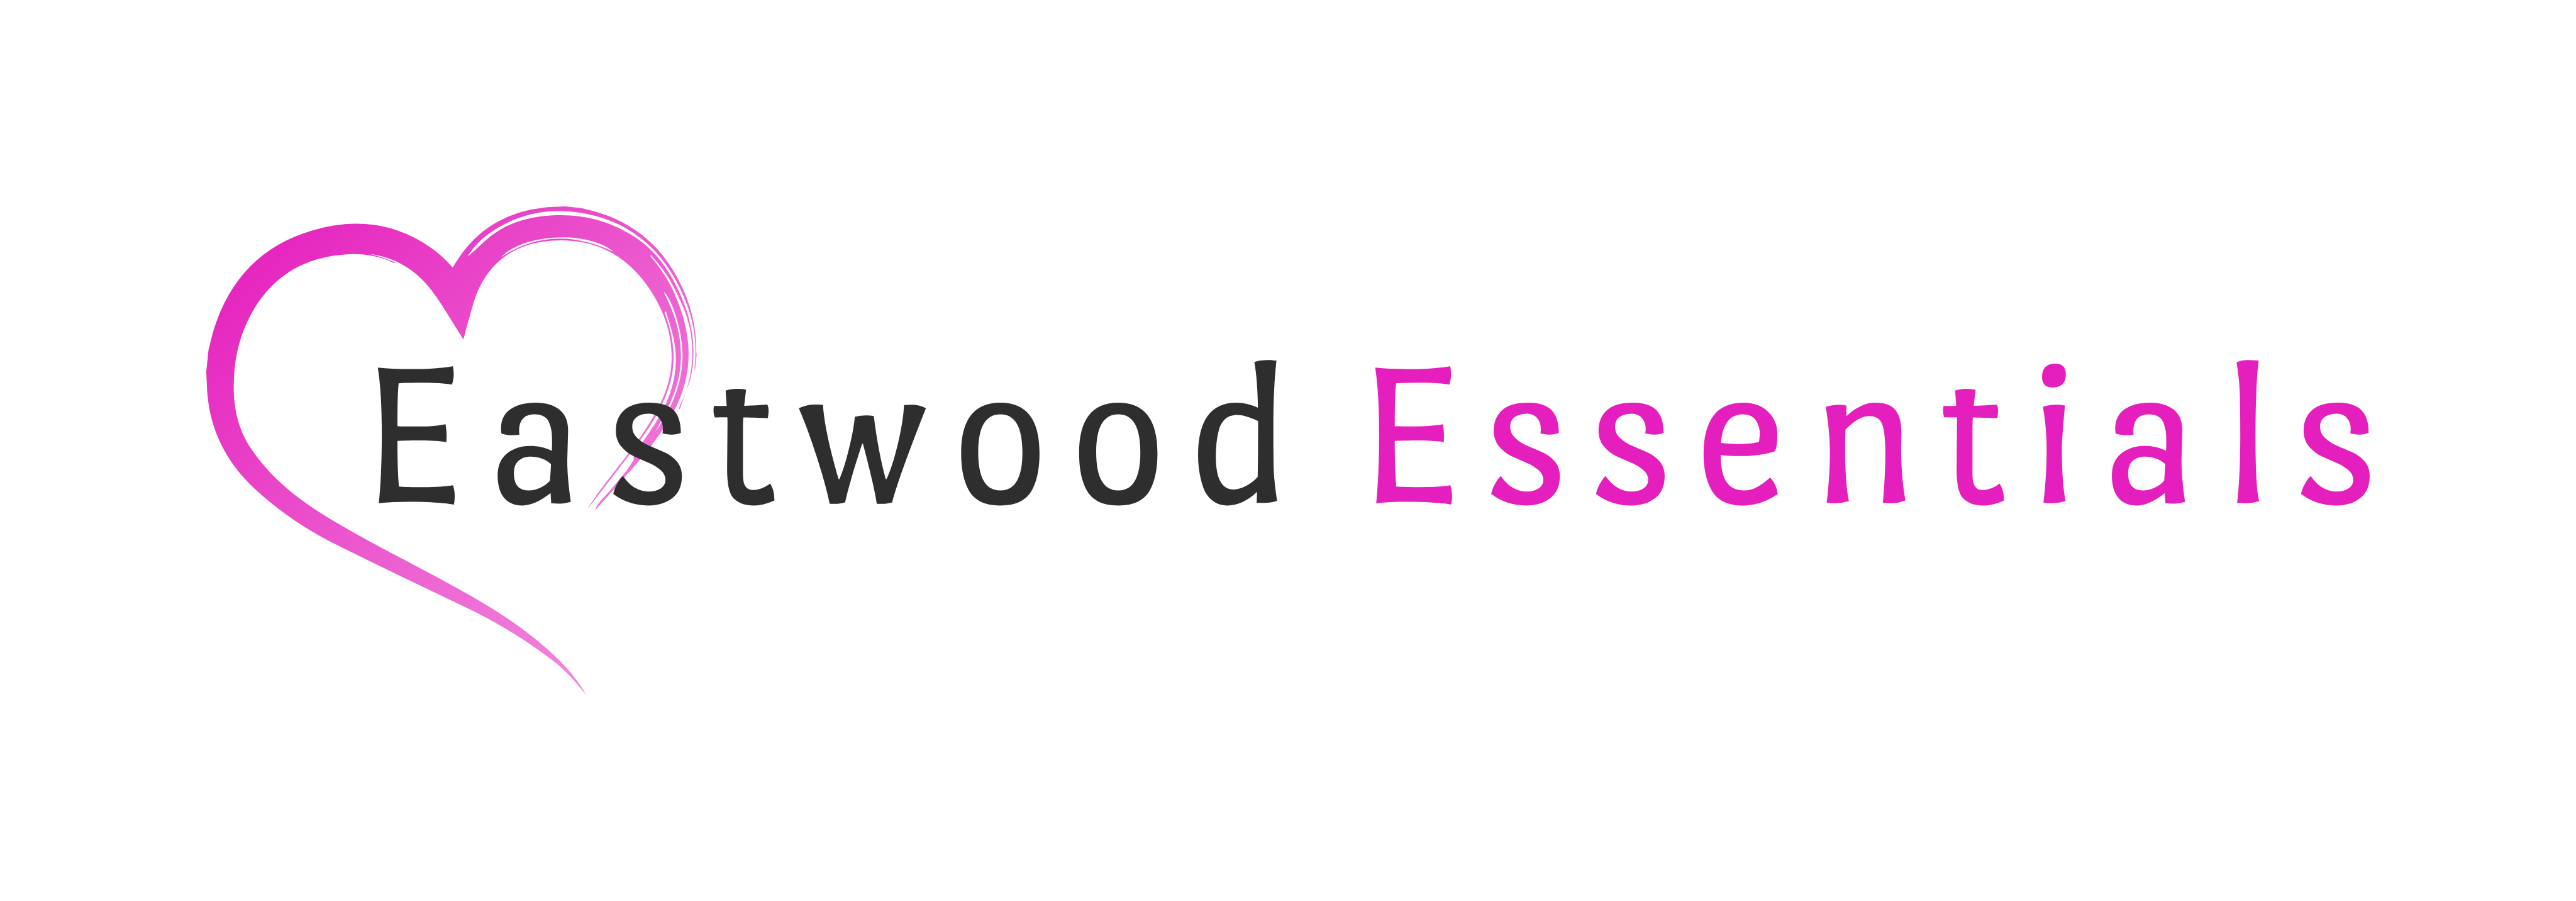 Eastwood Essentials